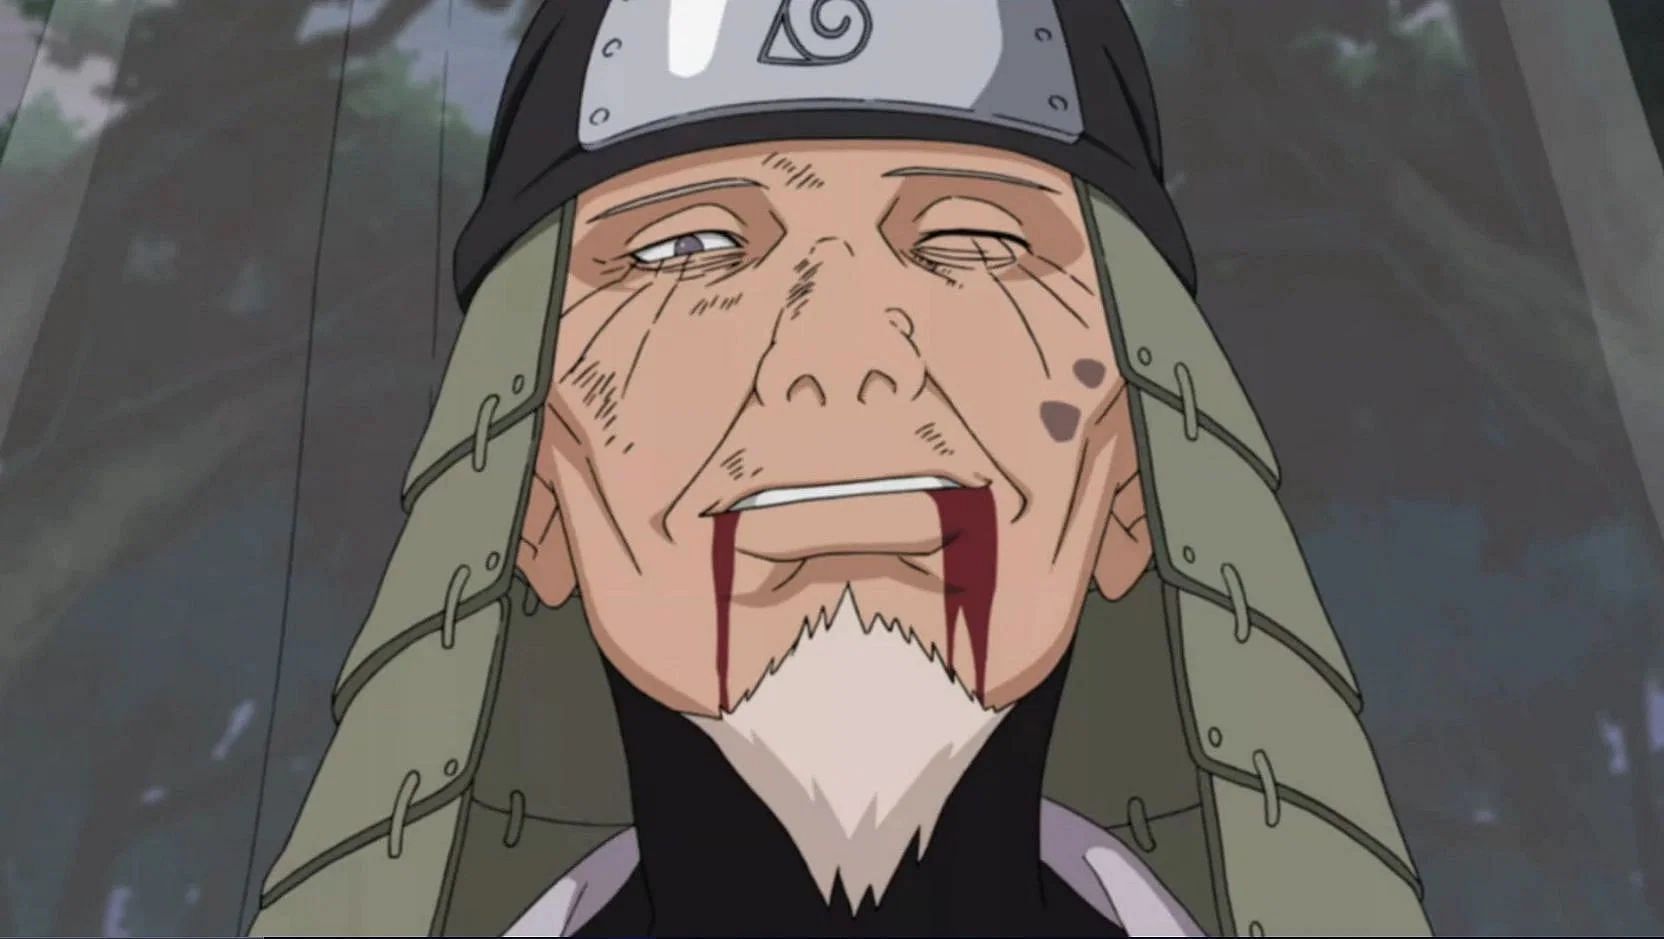 Hiruzen Sarutobi as seen in the Naruto series (image via Studio Pierrot)